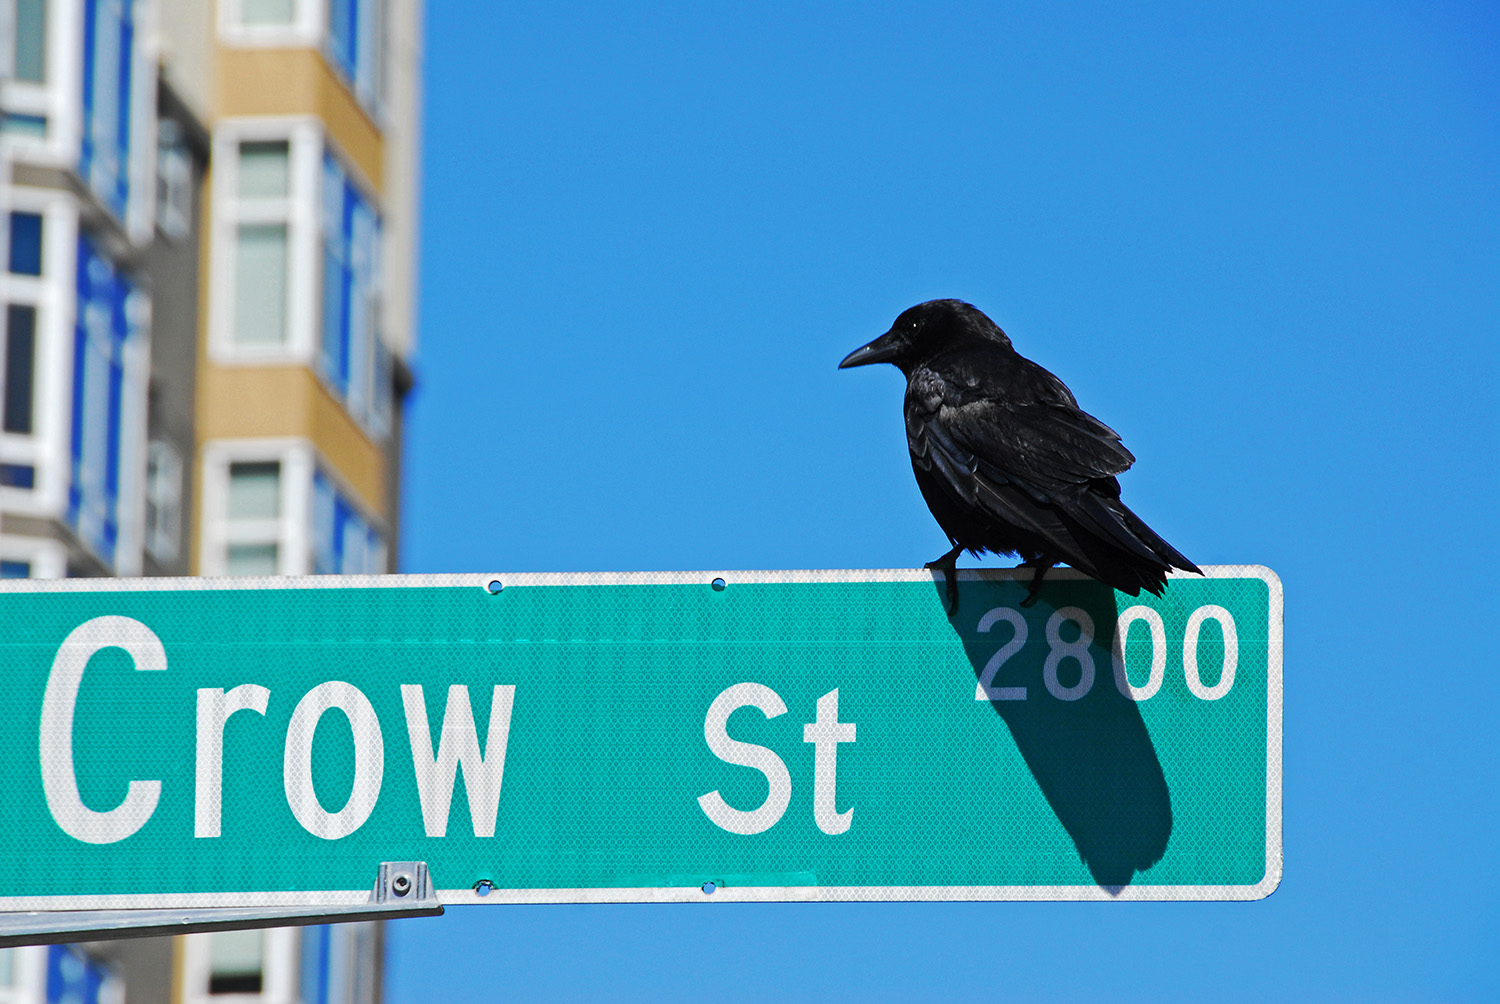 Western_Crow_Street_Sign_Perched_Washington.jpg